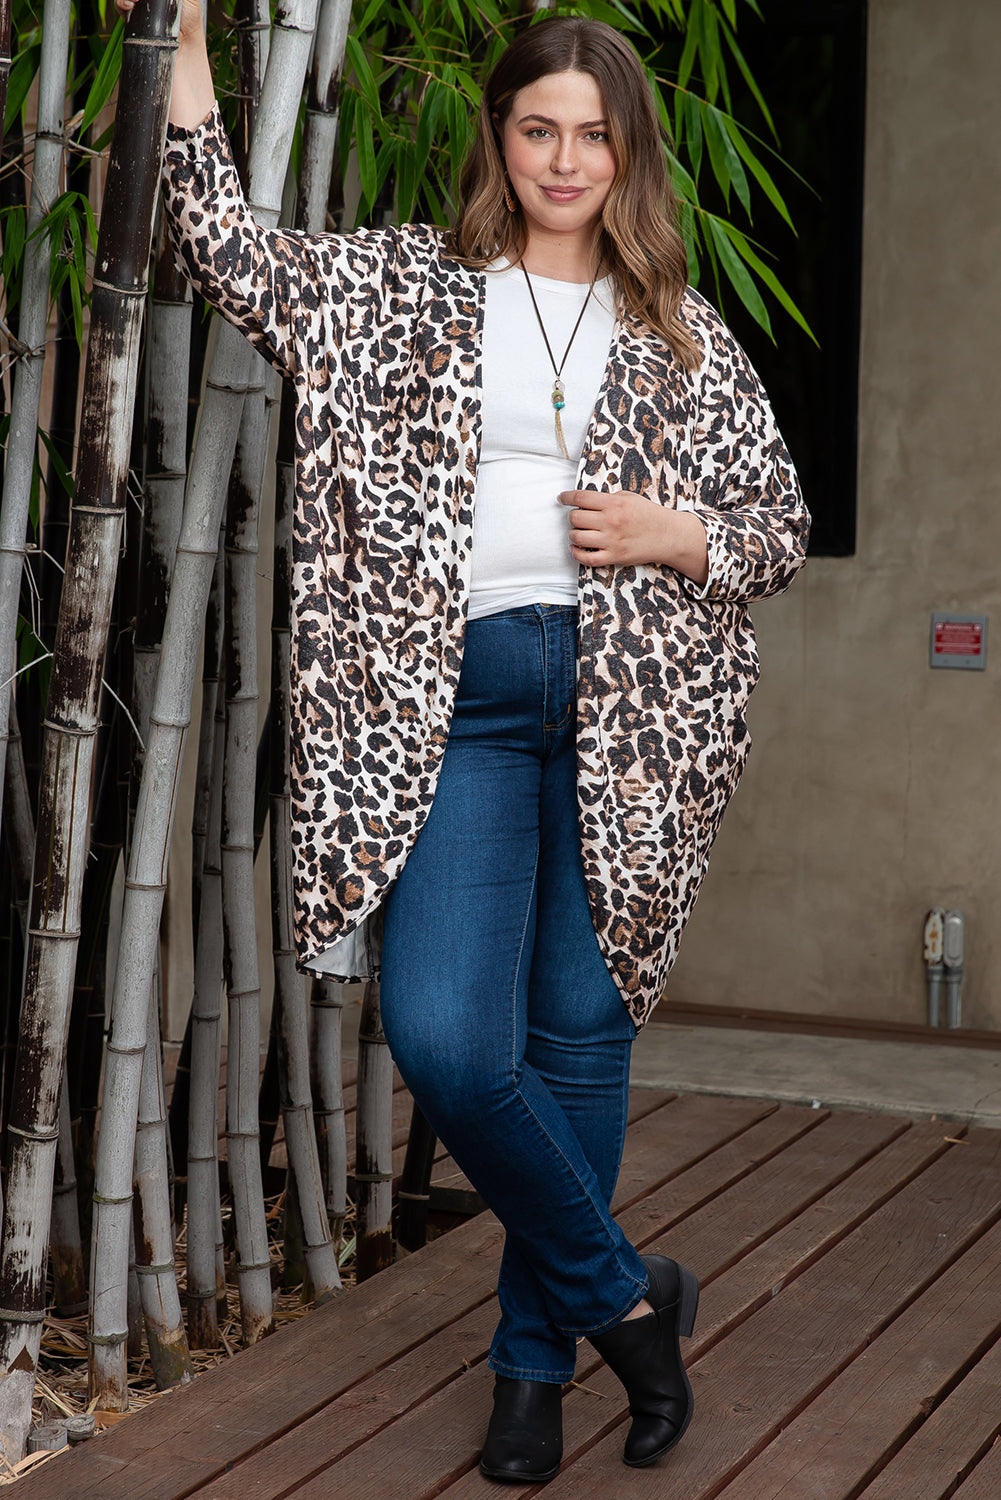 Leopard Plus Size Draped Open Front Cardigan